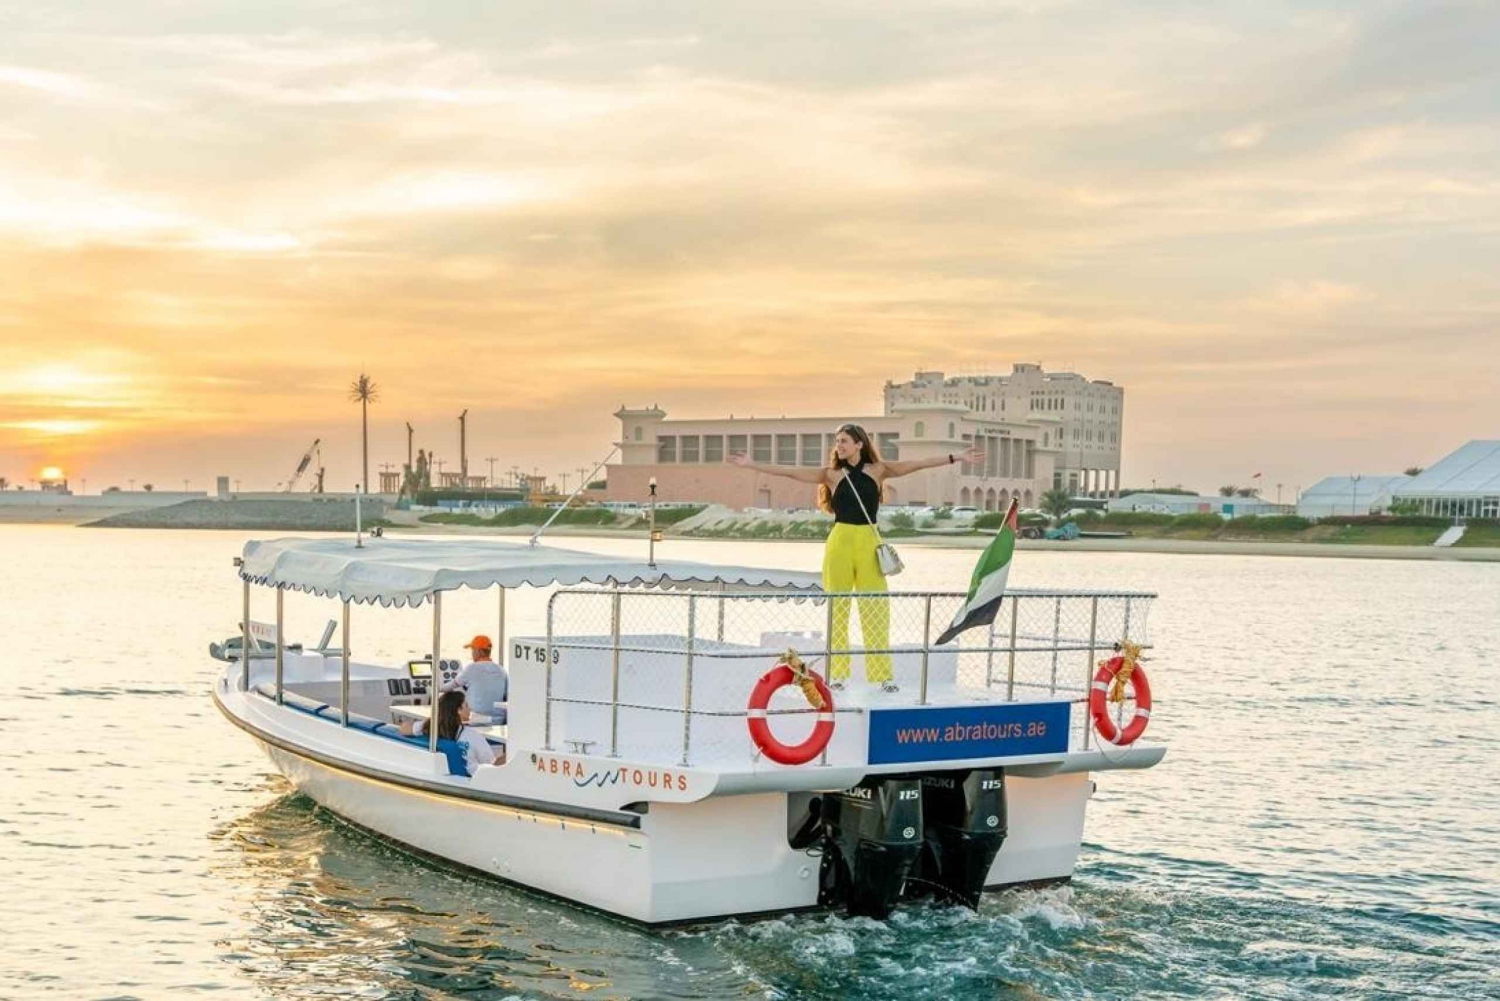 Dubaï : Sunset Abra Boat Tour dans la marina de Dubaï, Ain Dubaï, JBR